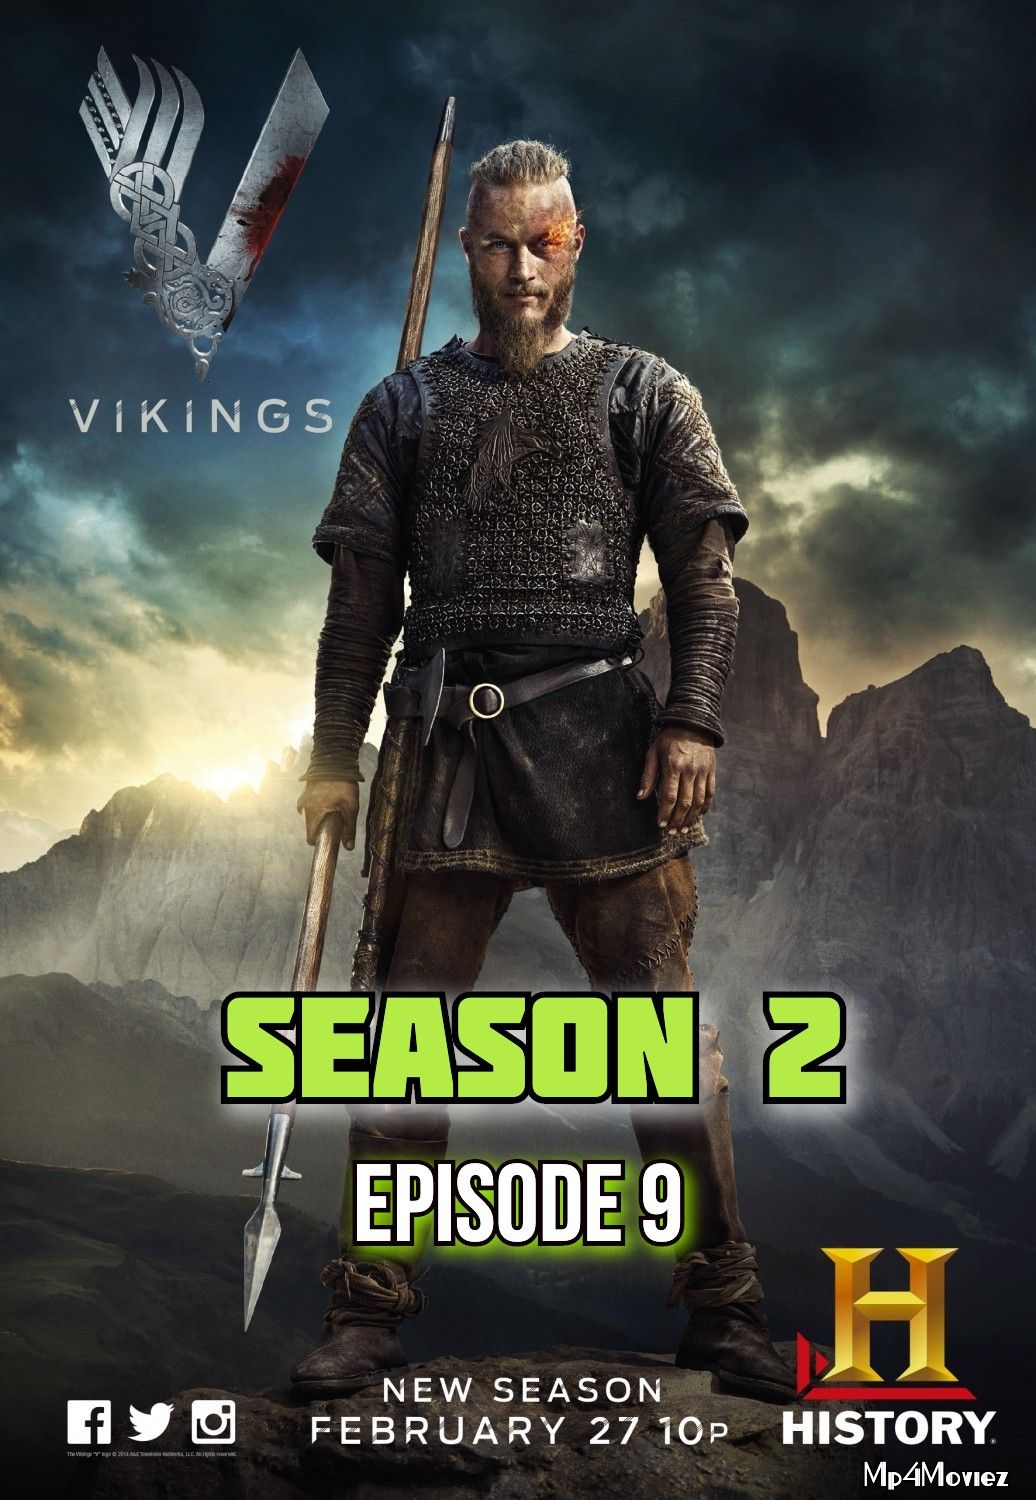 Vikings S02E09 (The Choice) Hindi Dubbed download full movie